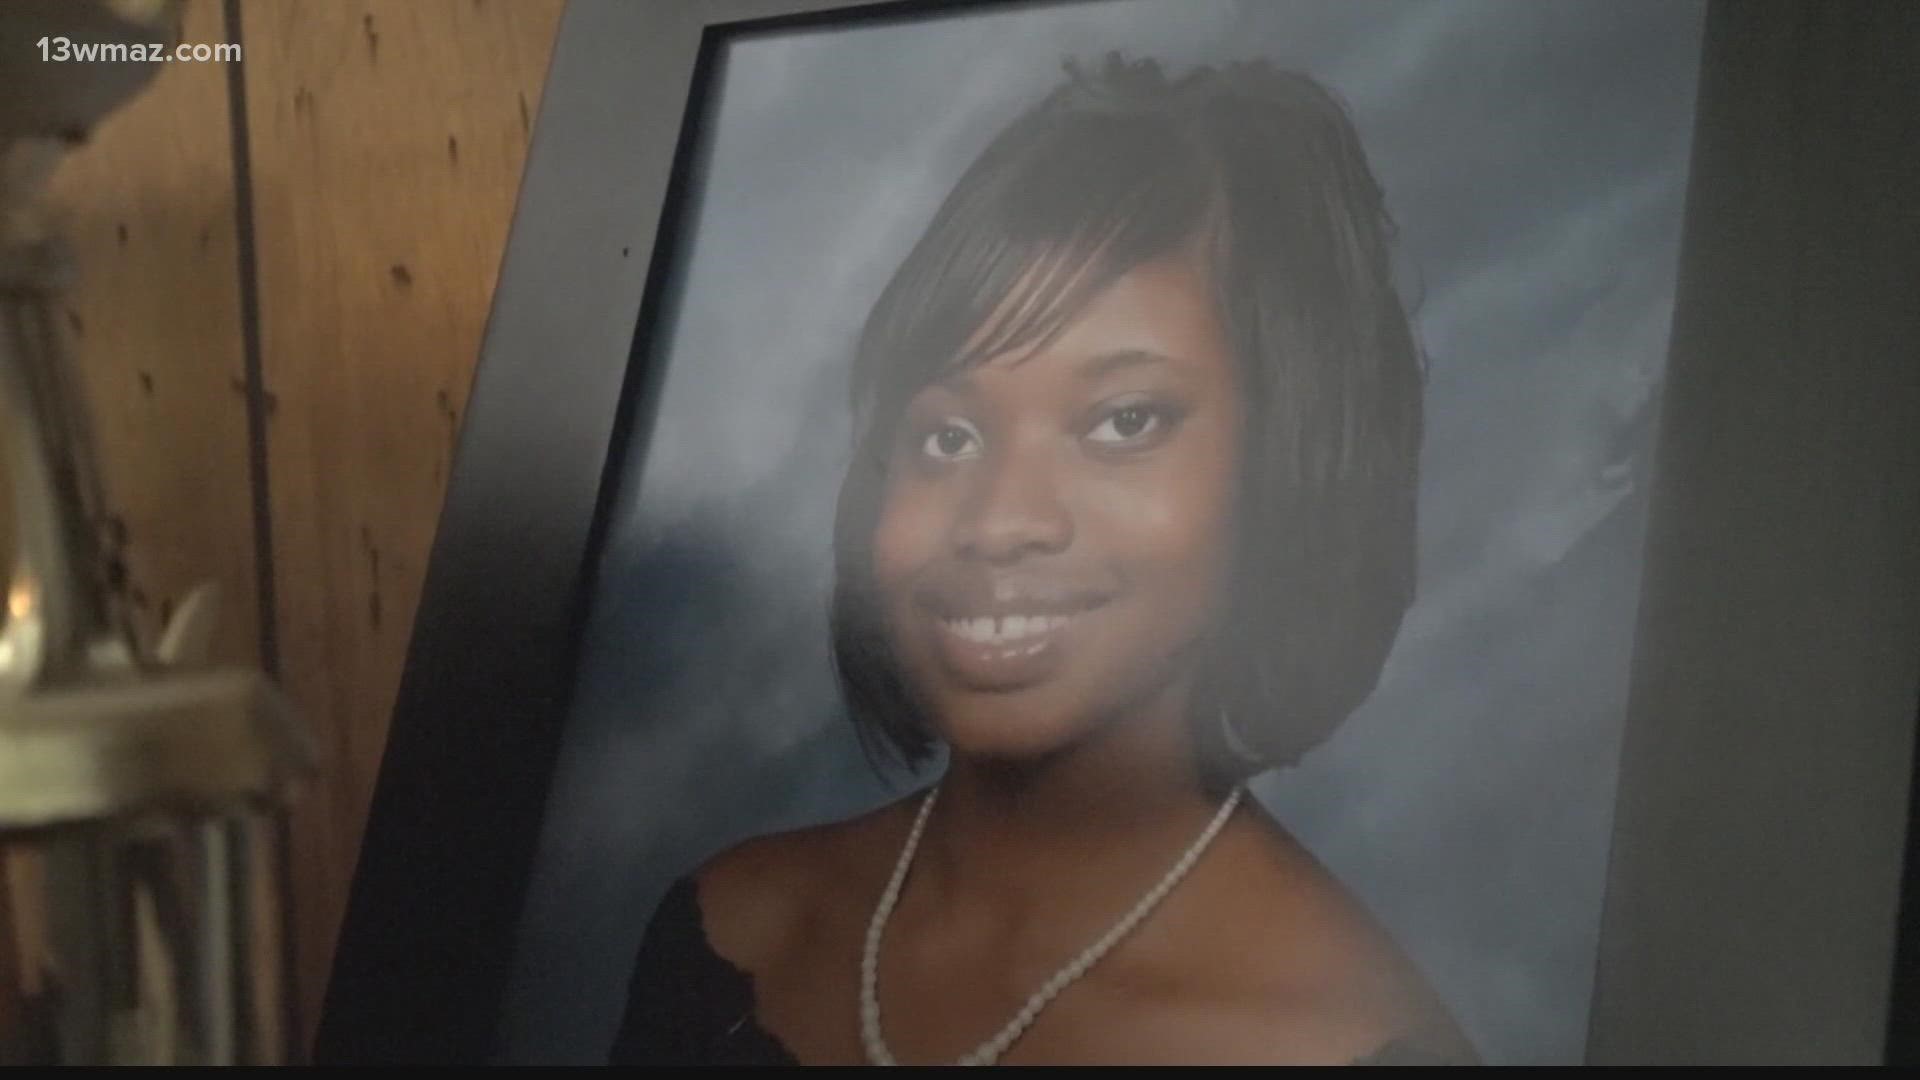 28-year-old Brianna Marie Grier died Thursday at Grady Memorial Hospital in Atlanta.